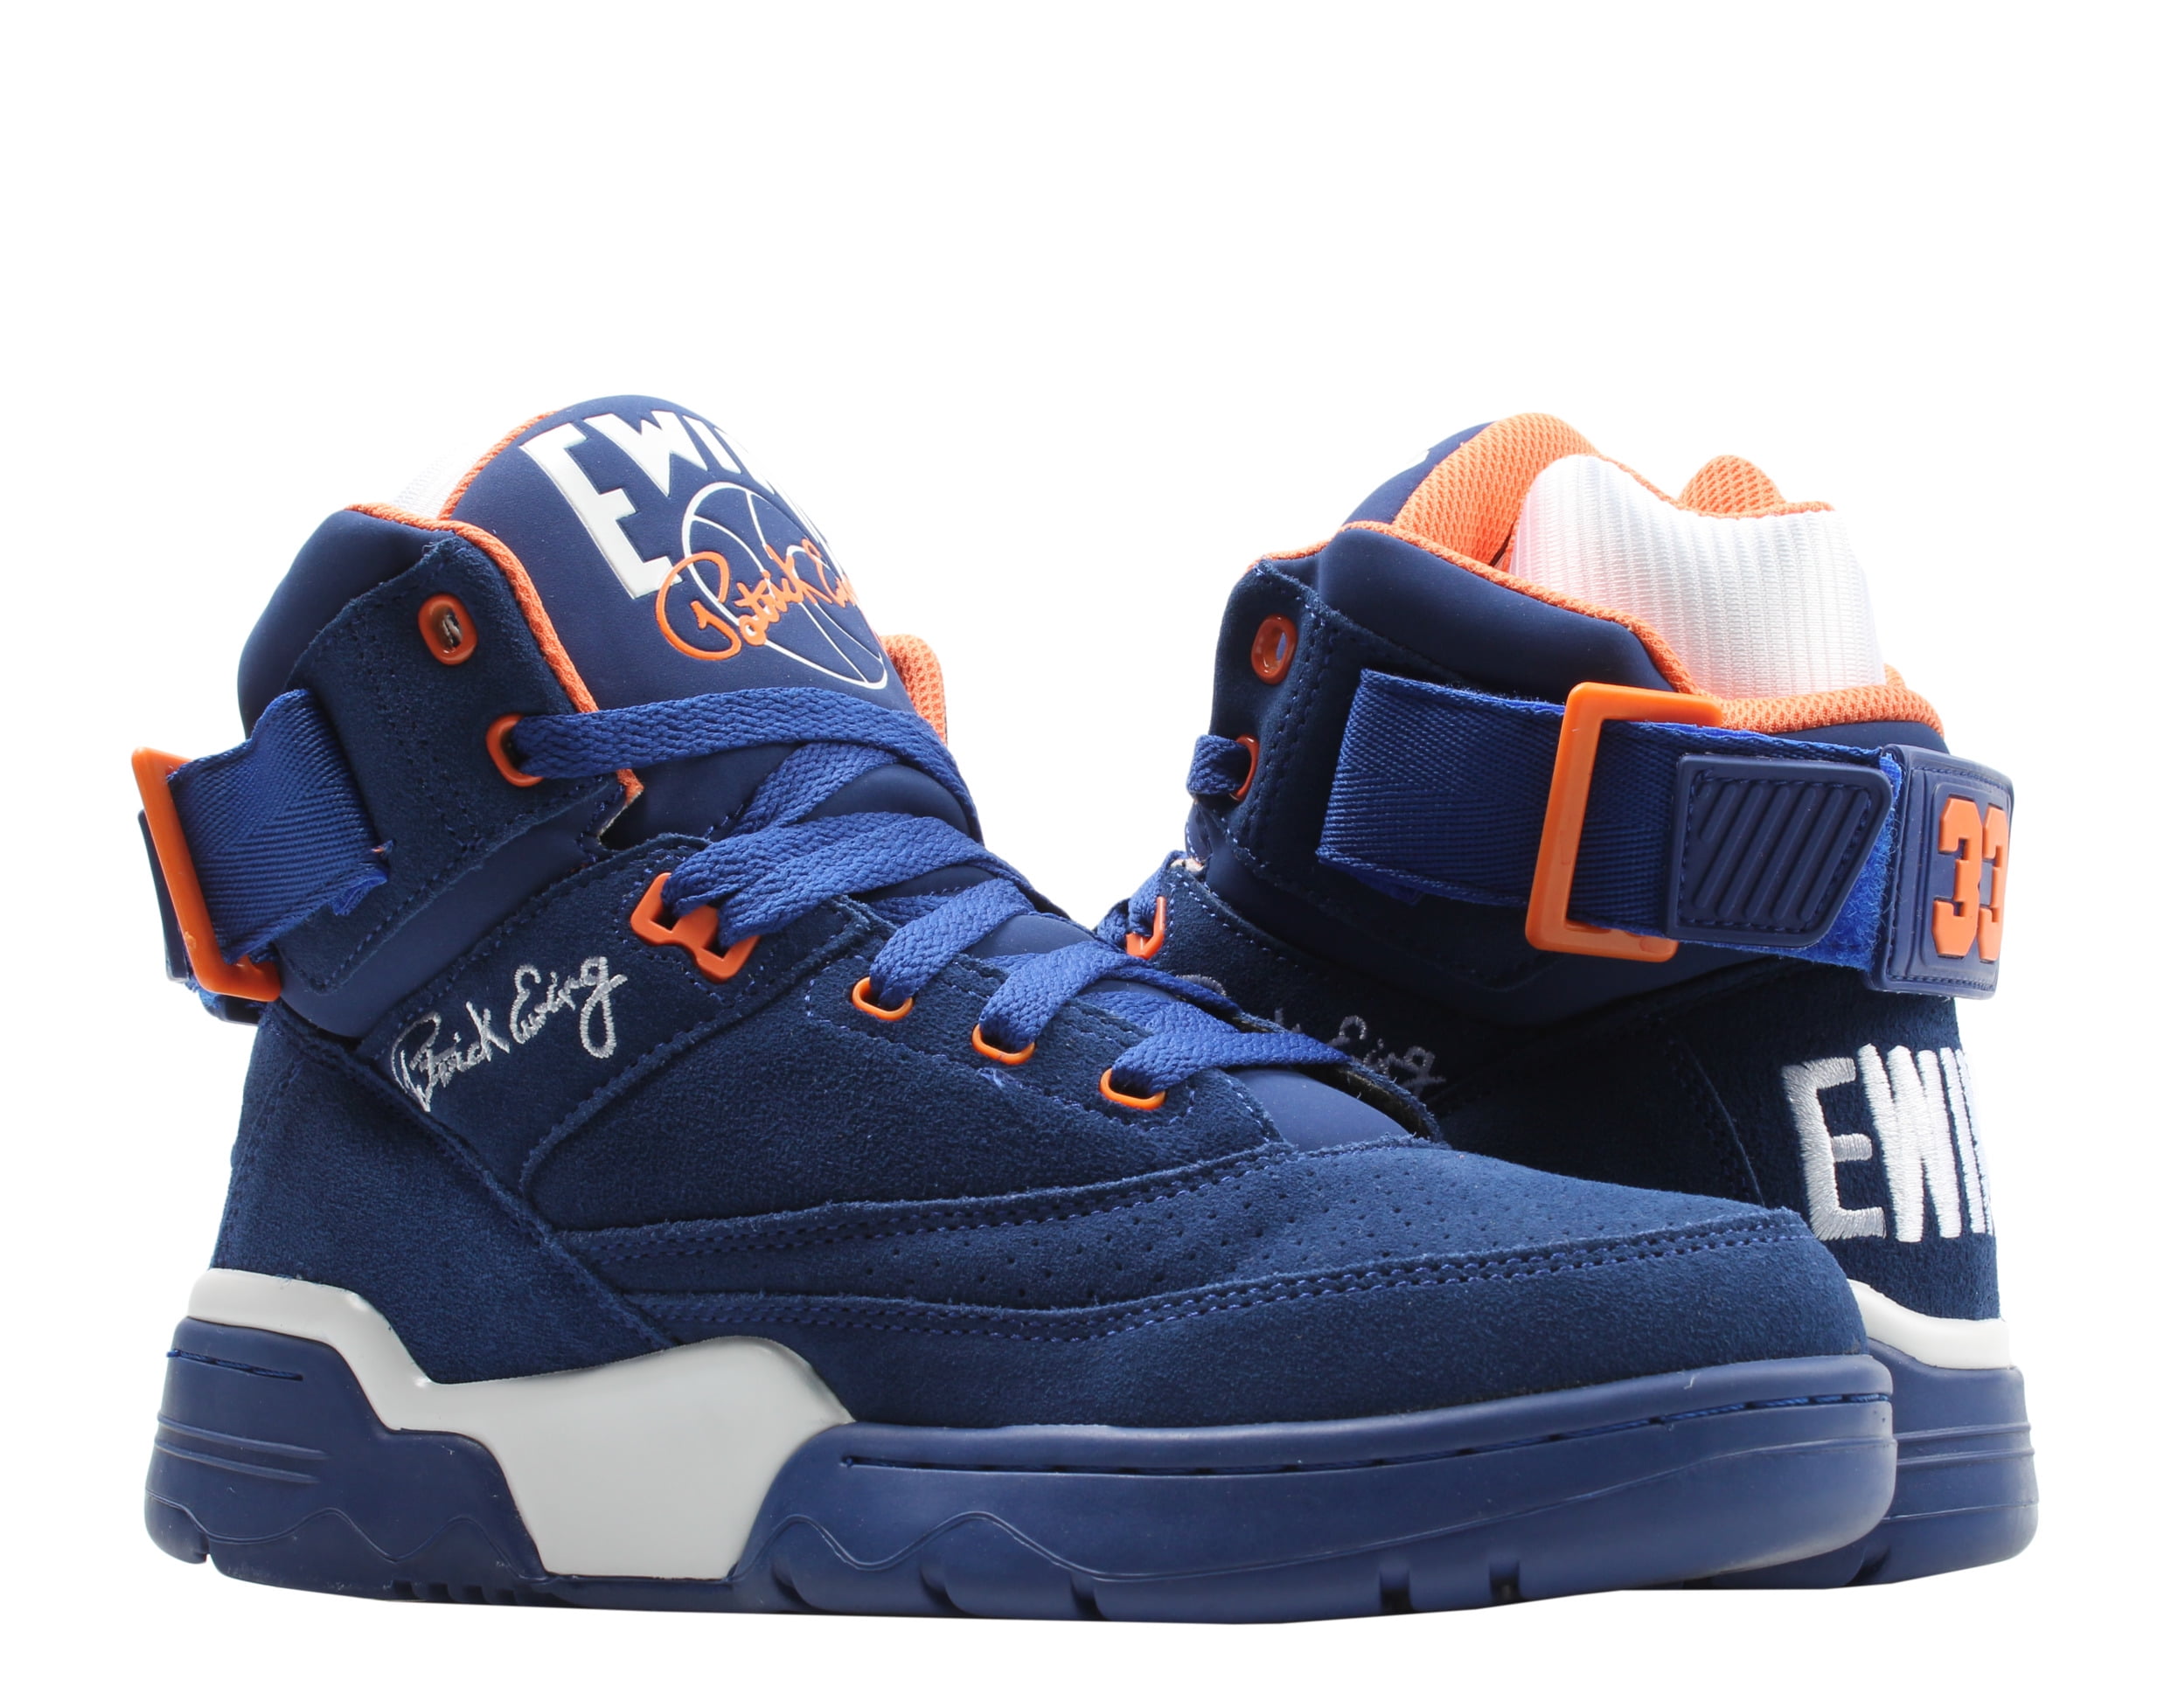 Patrick Ewing Athletics Hi Men's Shoes Sneakers Suede White Orange OG 1EW90013-449 - Walmart.com